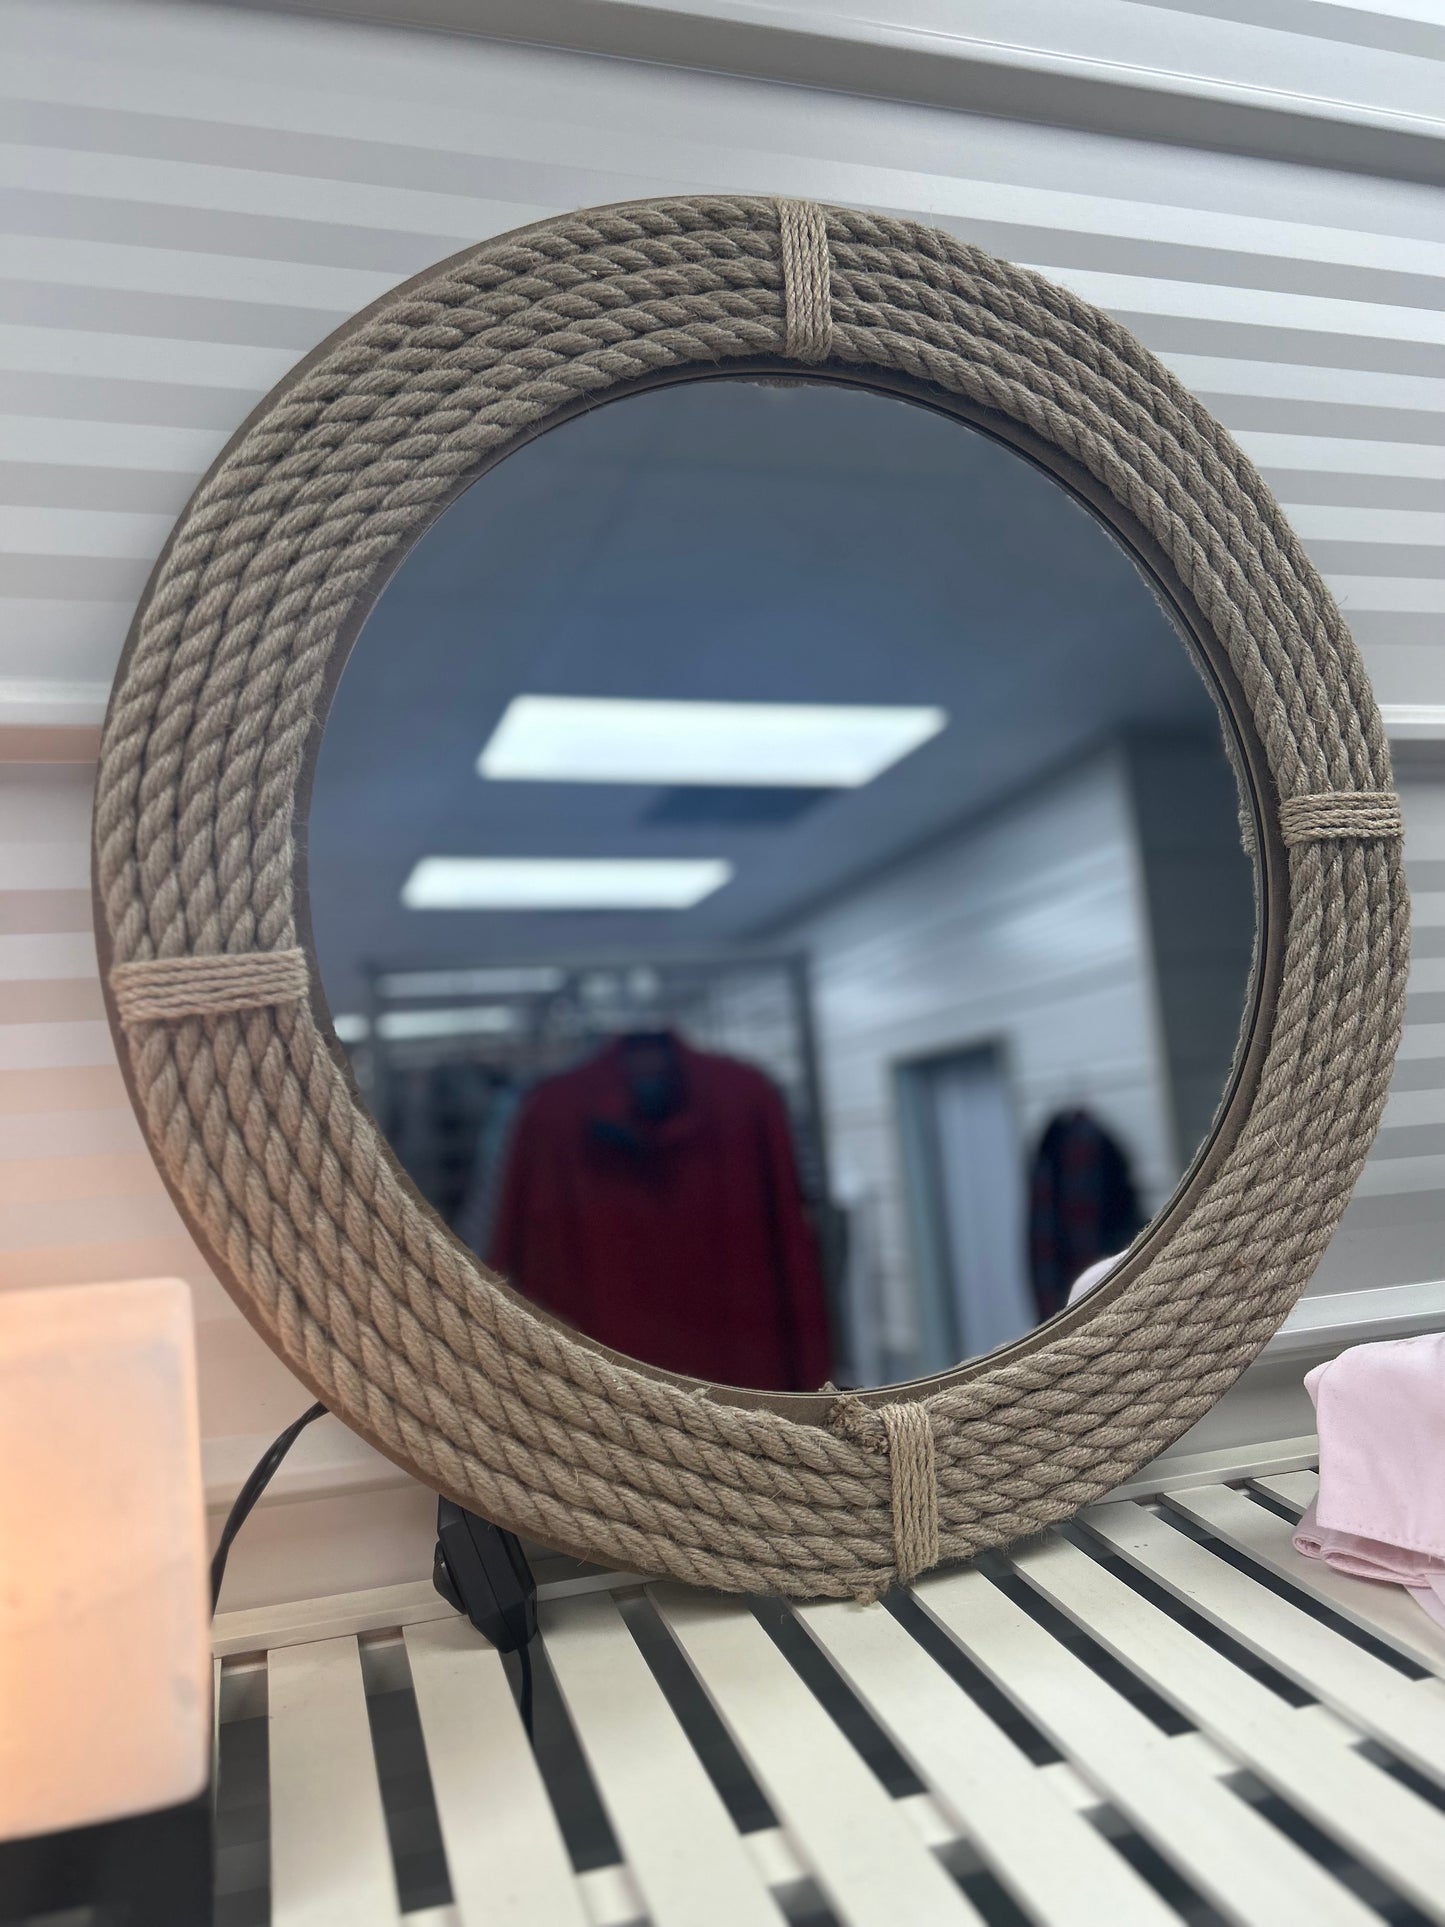 Rope Mirror